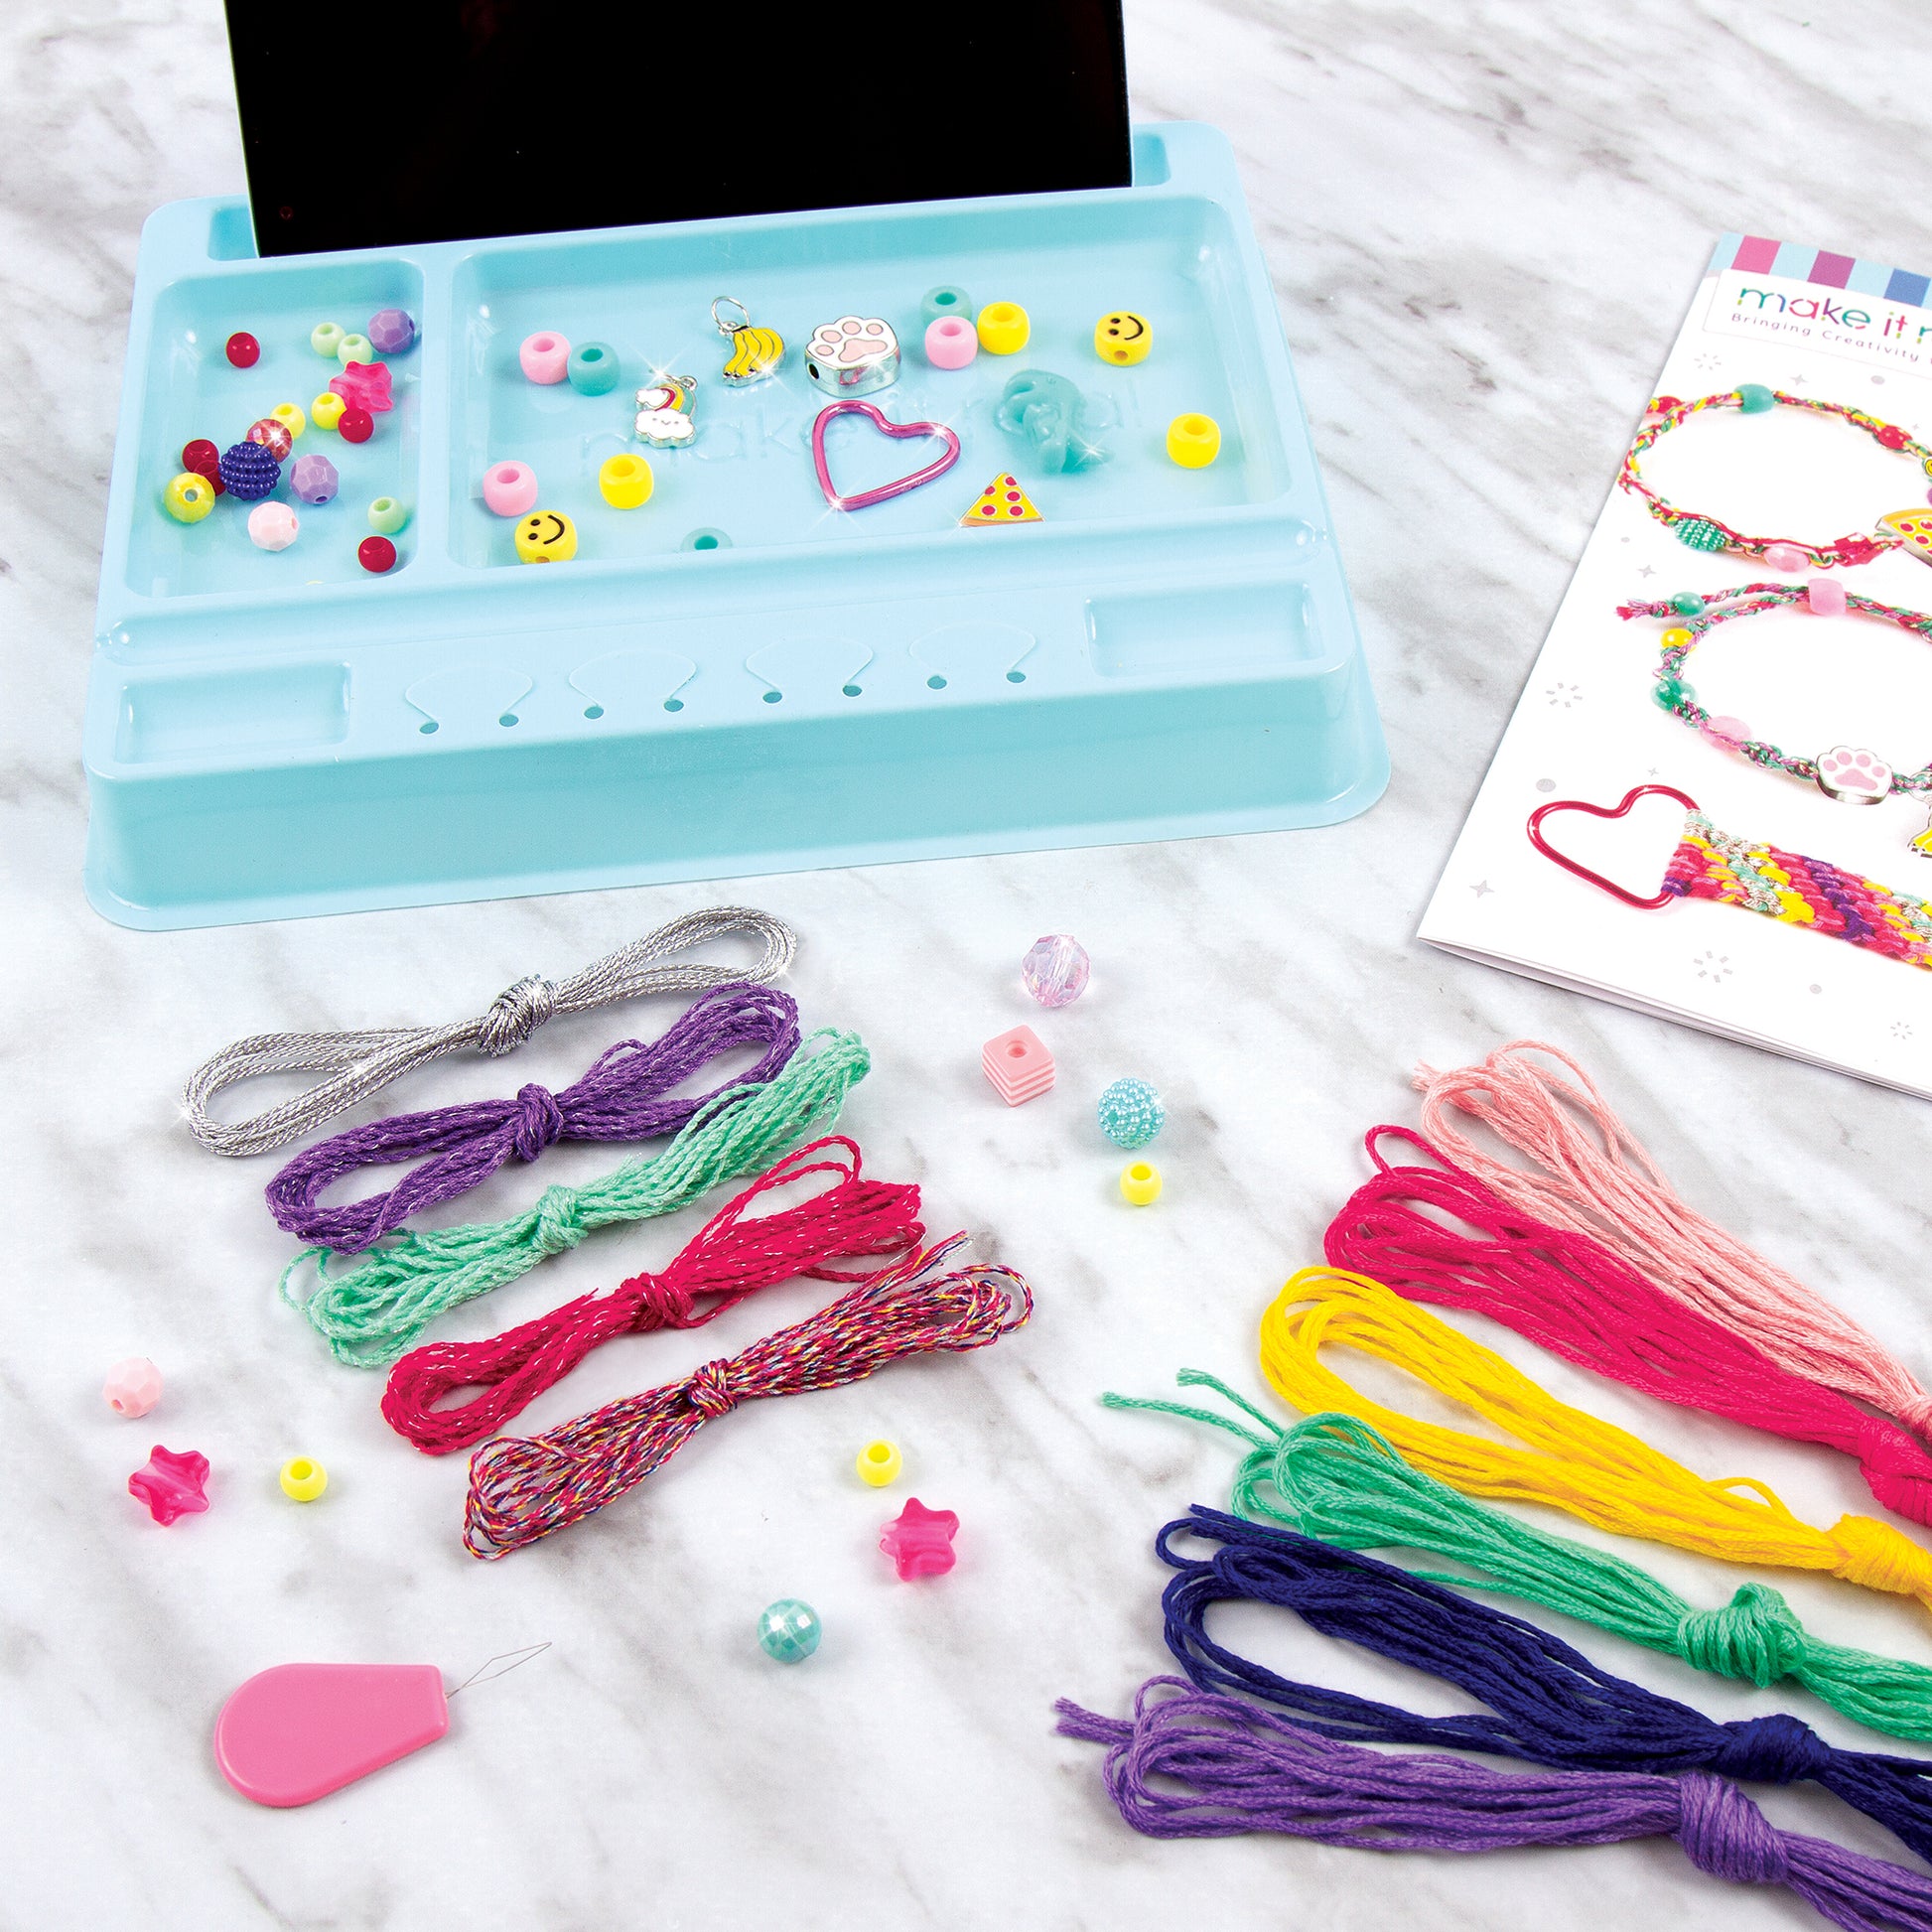 Make It Real™ Sweet Treats DIY Bracelet Kit